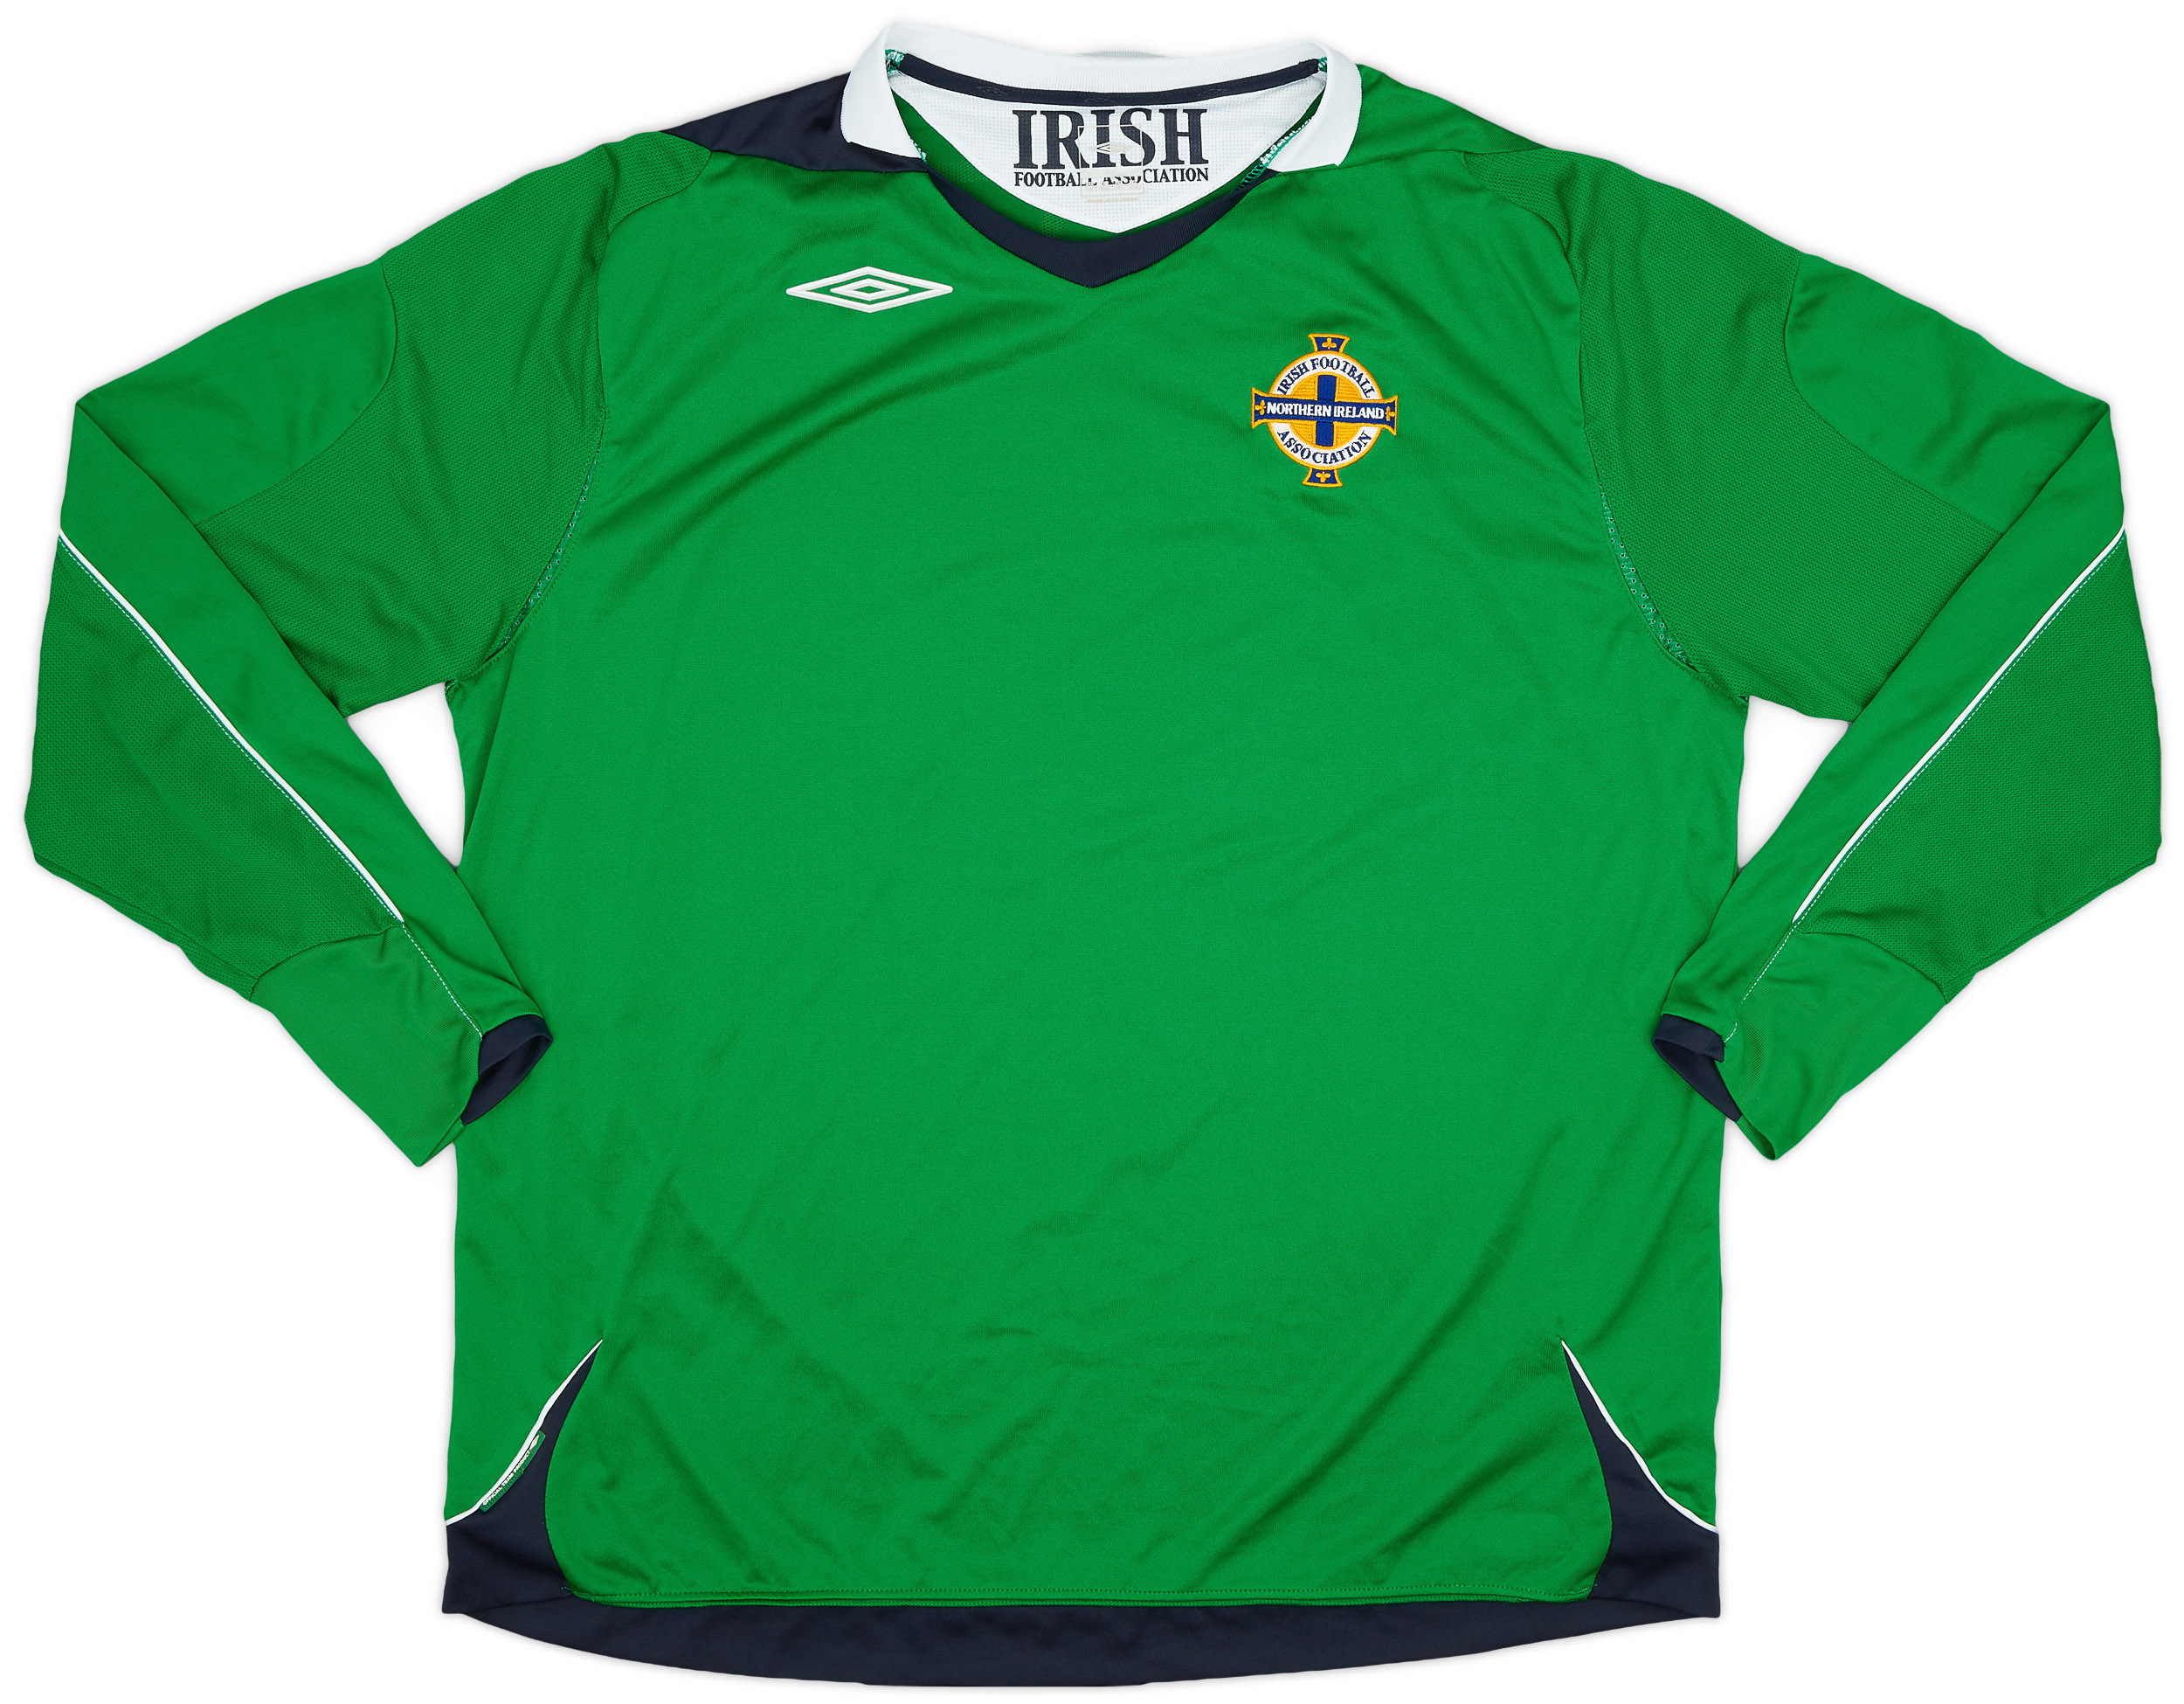 2006-08 Northern Ireland Home Shirt - 9/10 - ()